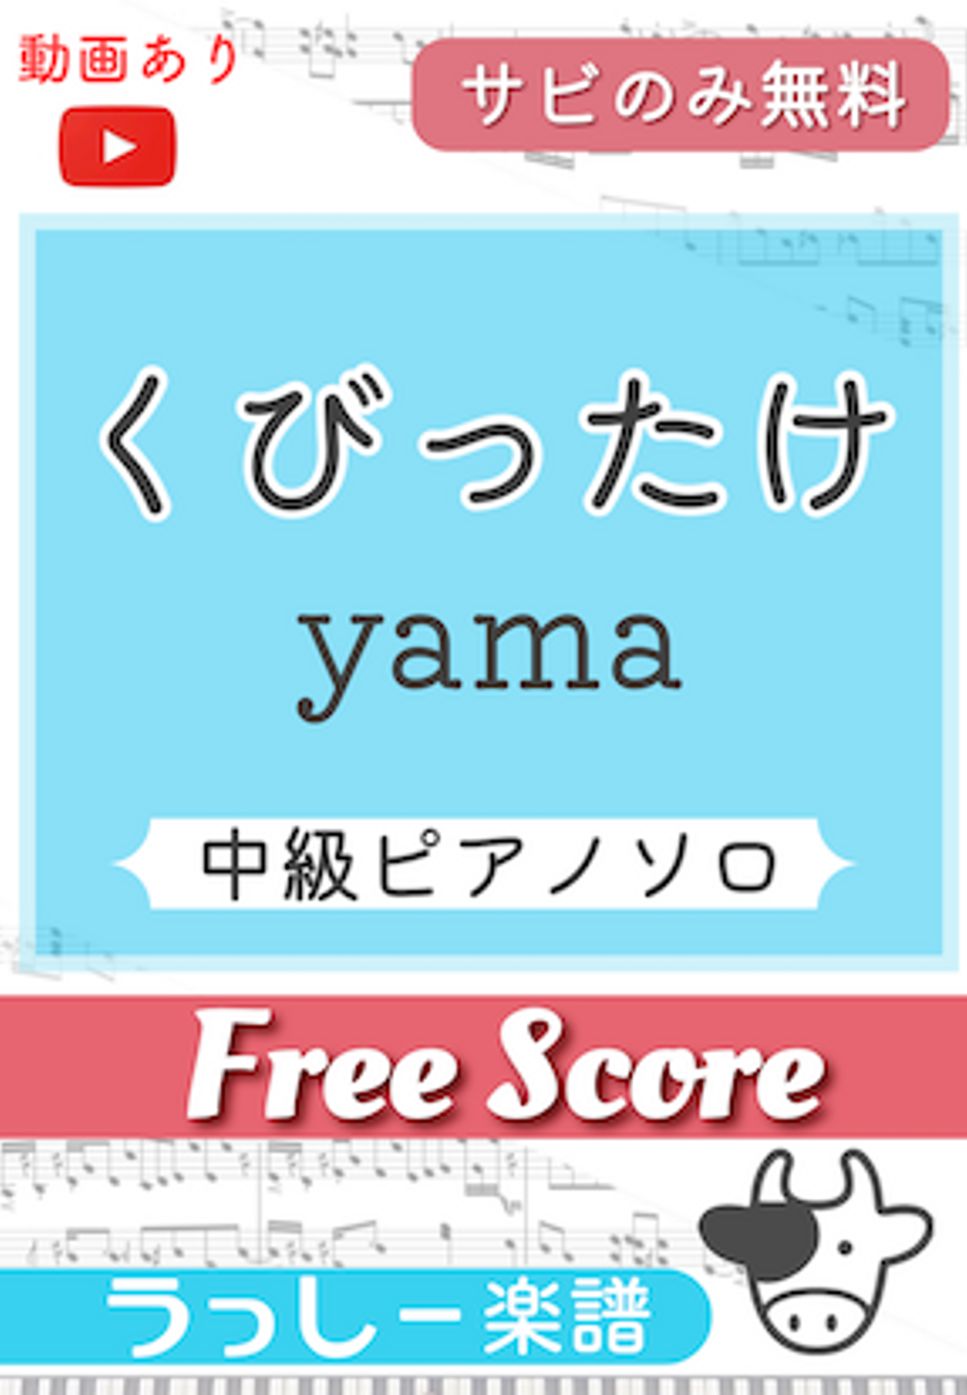 yama - くびったけ (サビのみ無料) by 牛武奏人